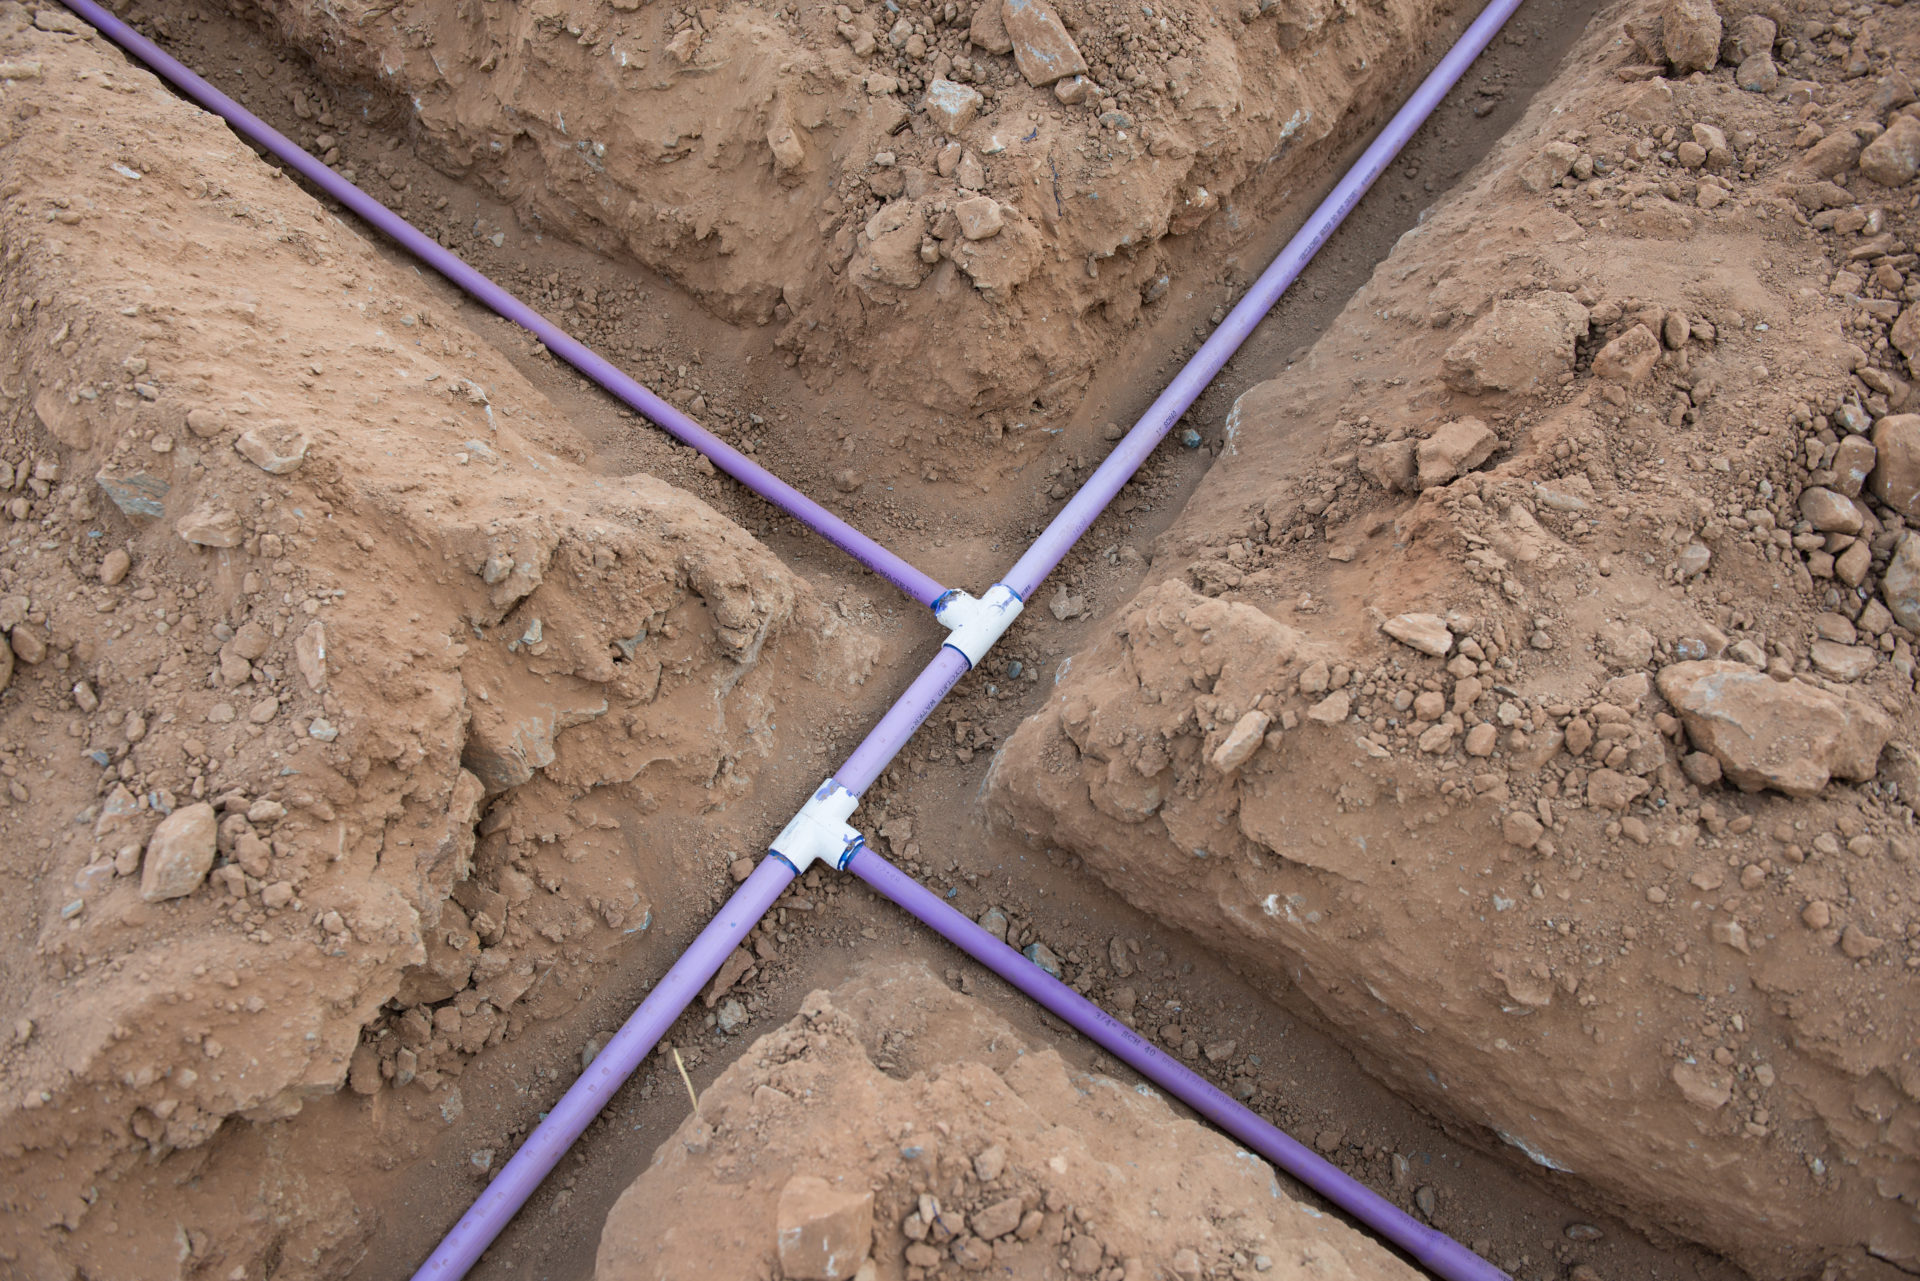 Sprinkler System Pipe Installation in trench